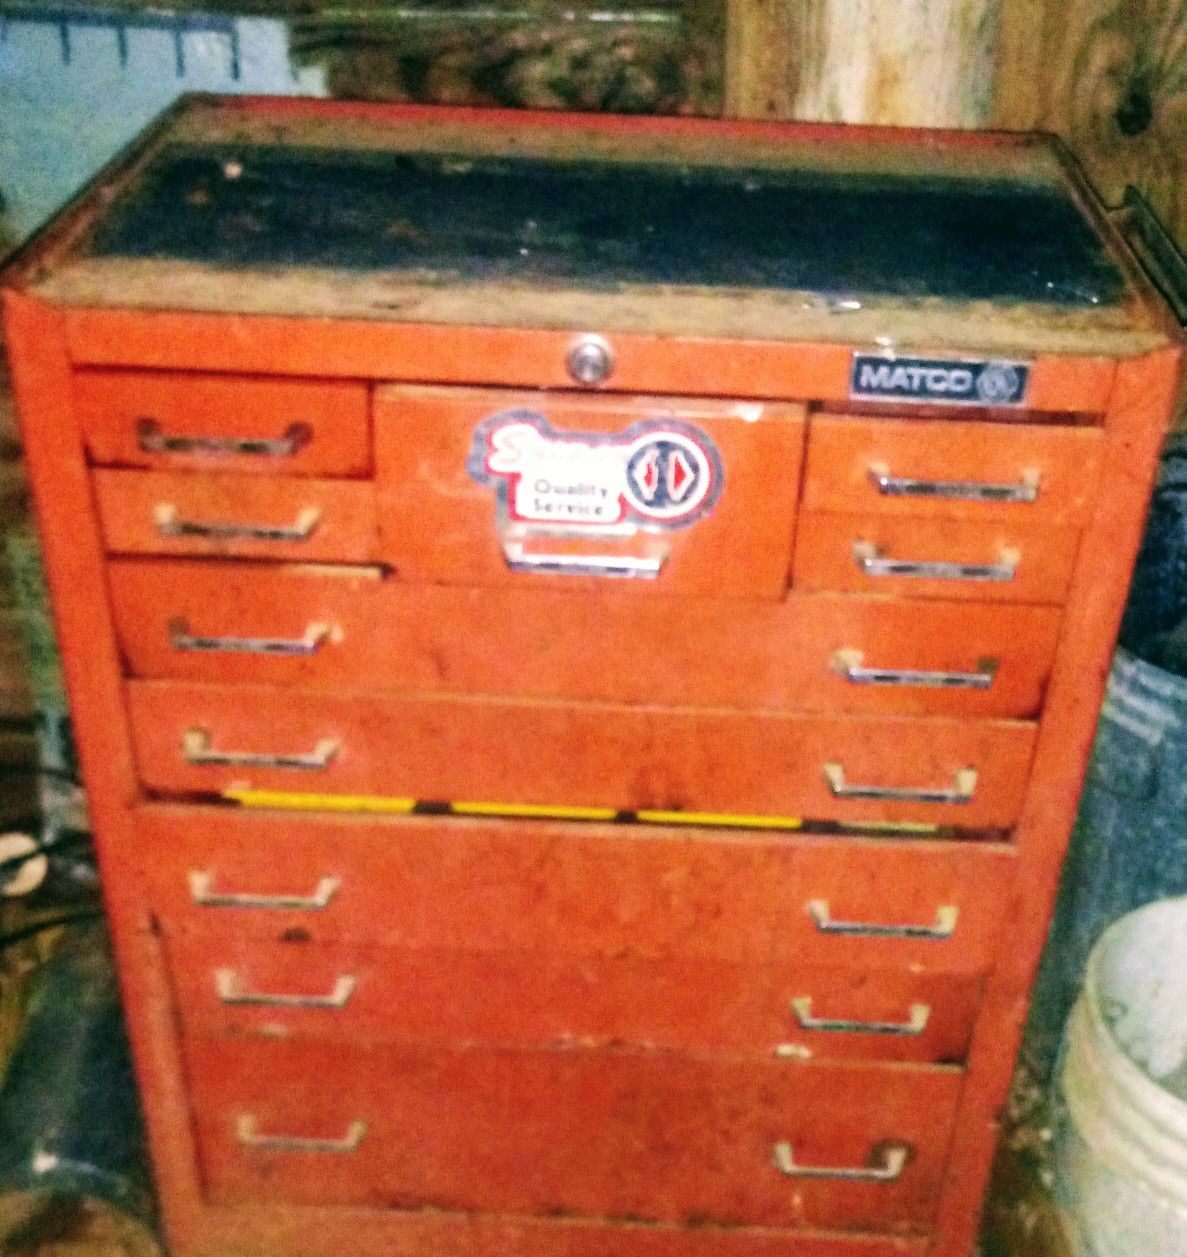 Vintage matco tool box